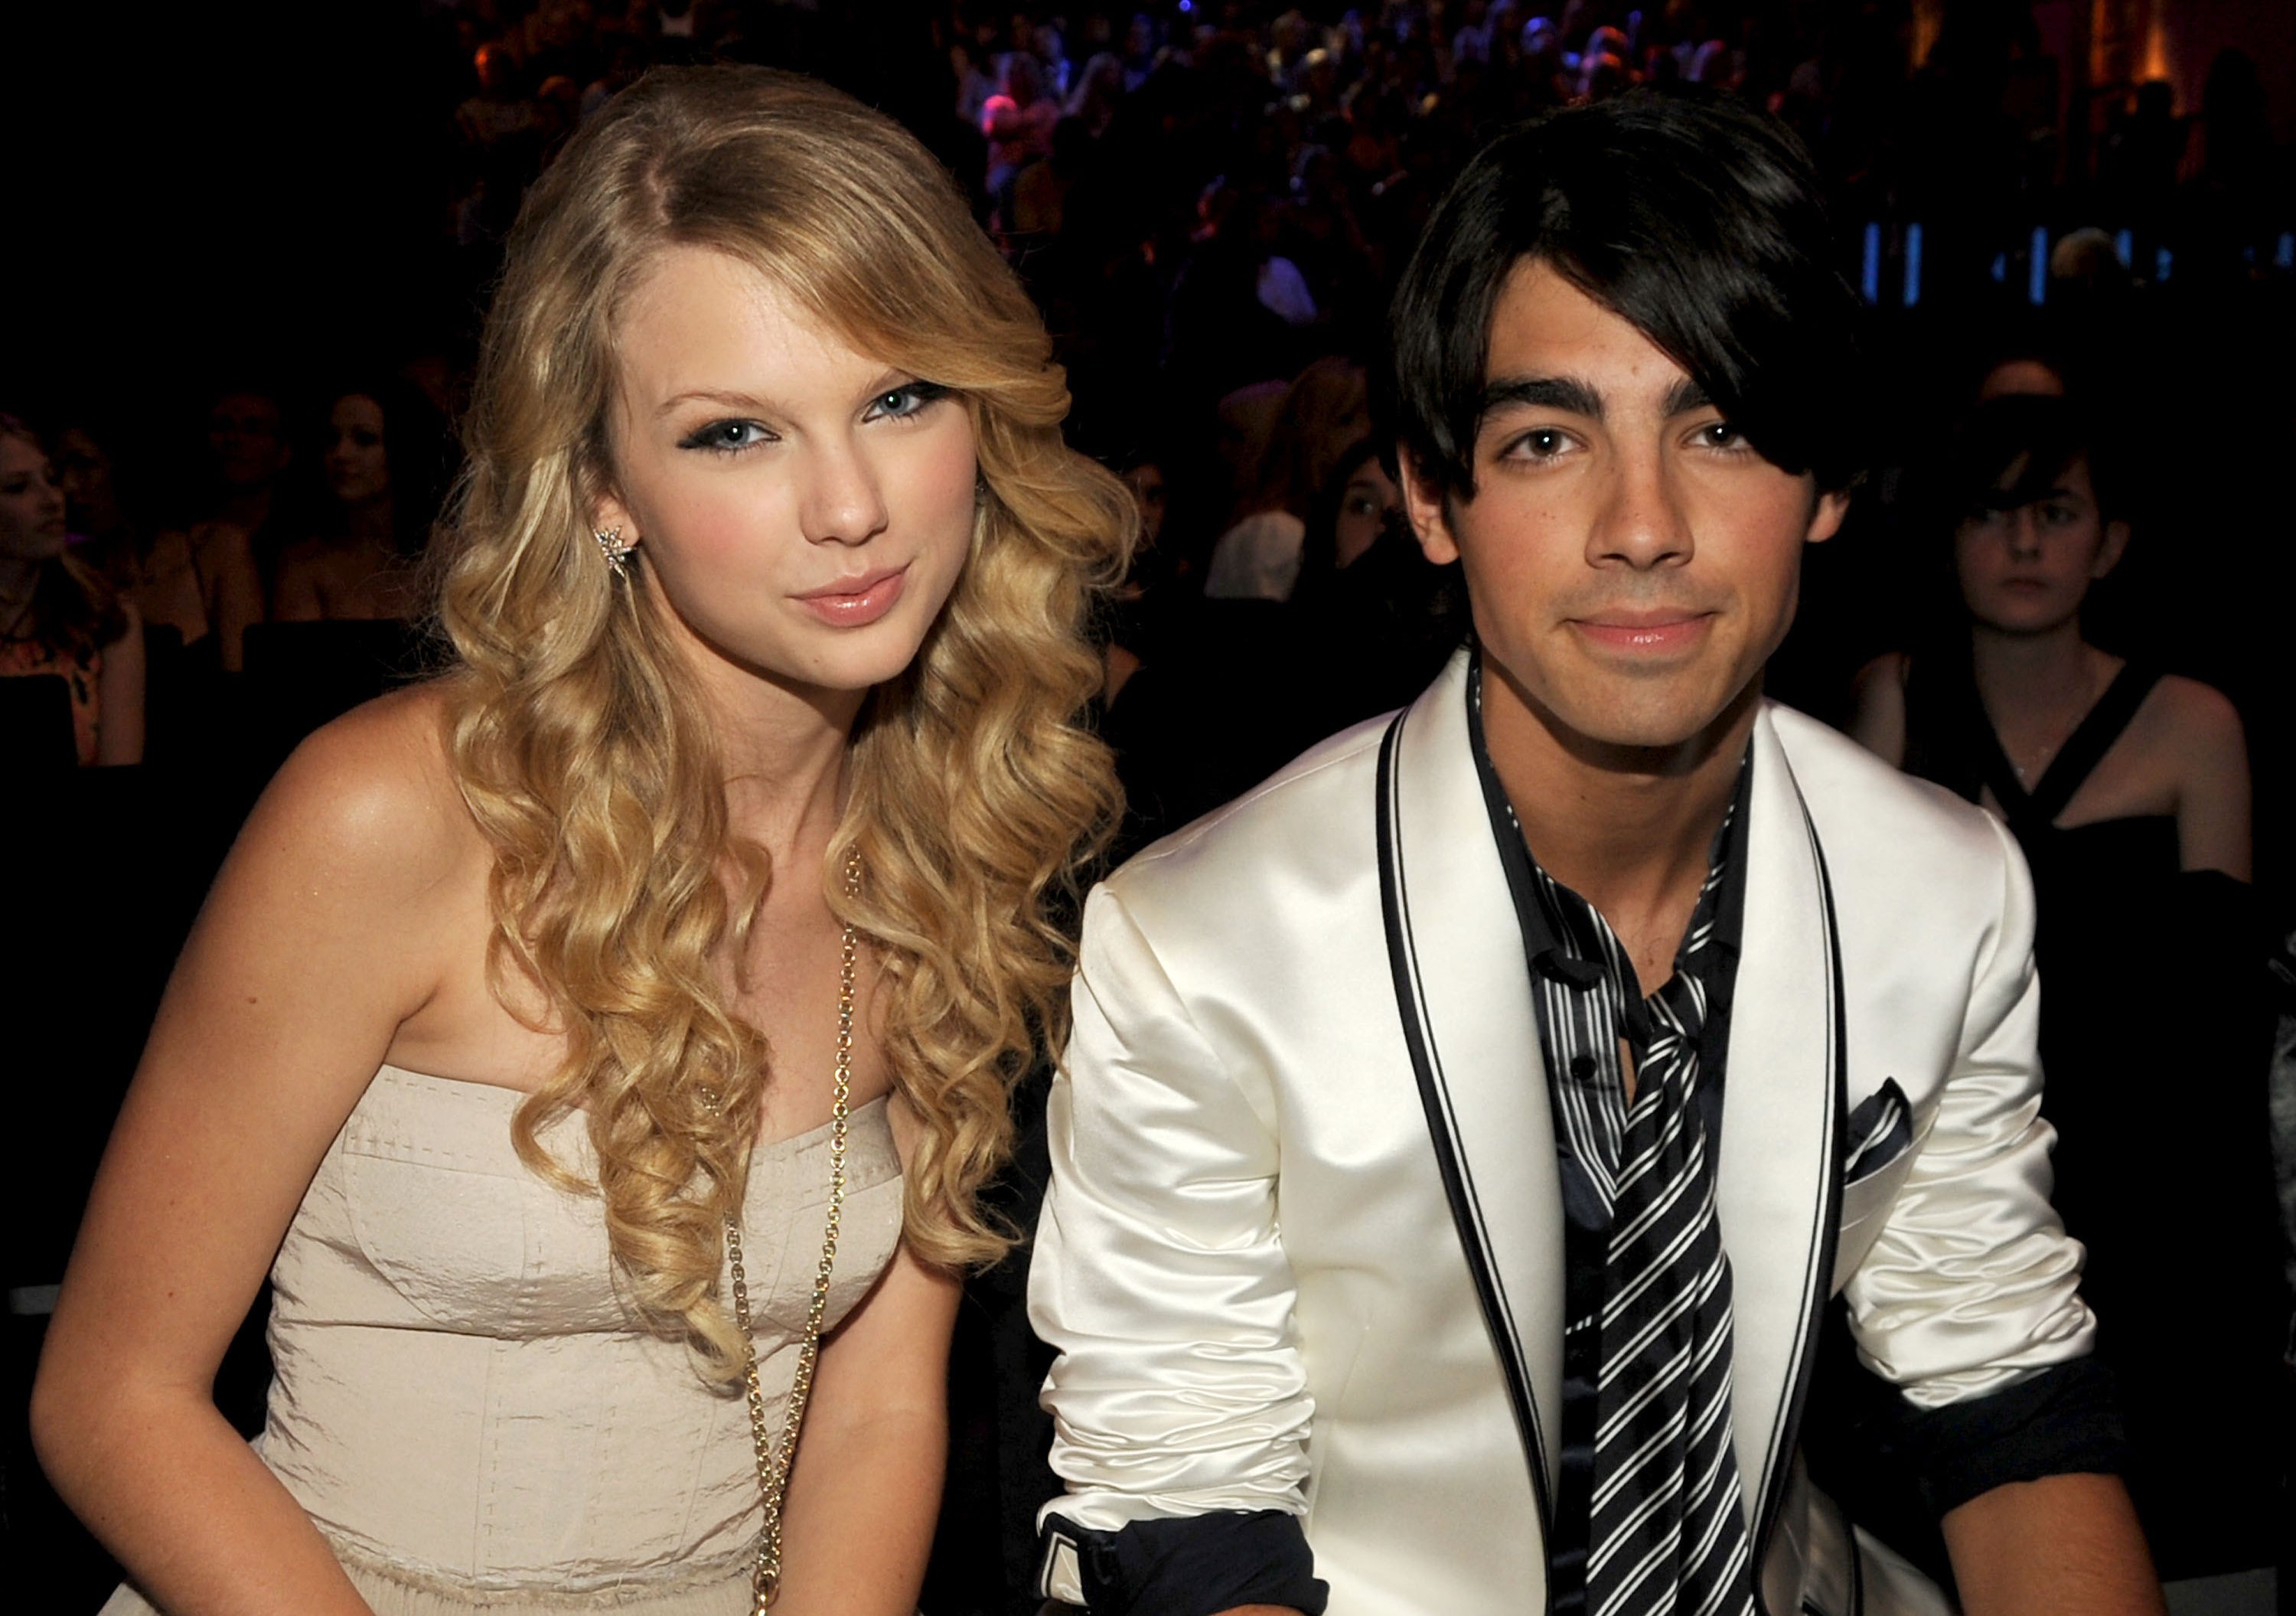 Taylor Swift and Joe Jonas at the 2008 MTV Video Music Awards